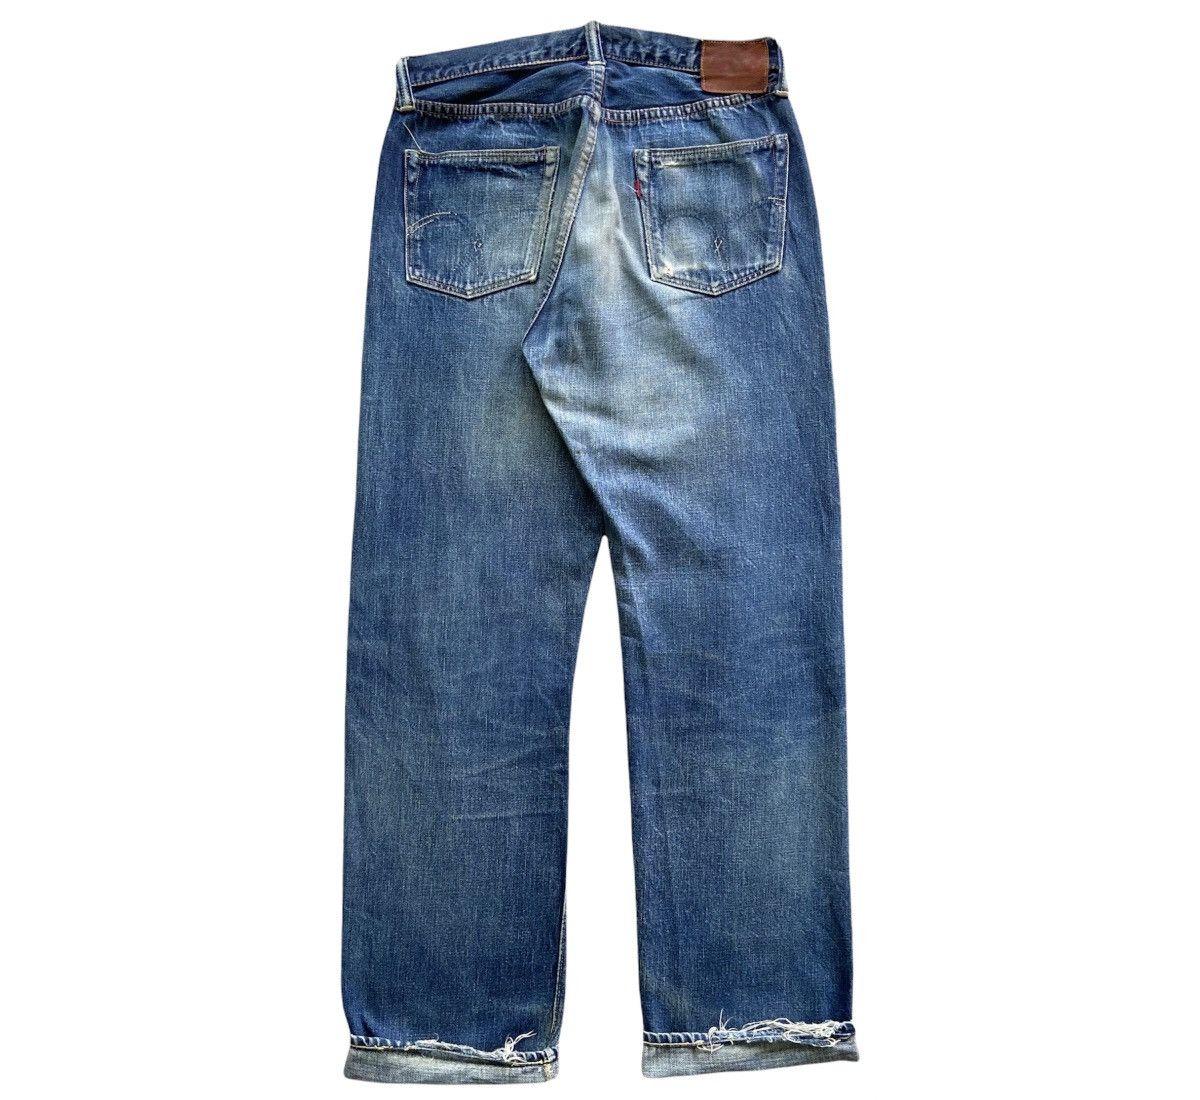 Full Count & Co. Vintage Full Count Selvedge Denim Jeans Size US 30 / EU 46 - 4 Thumbnail